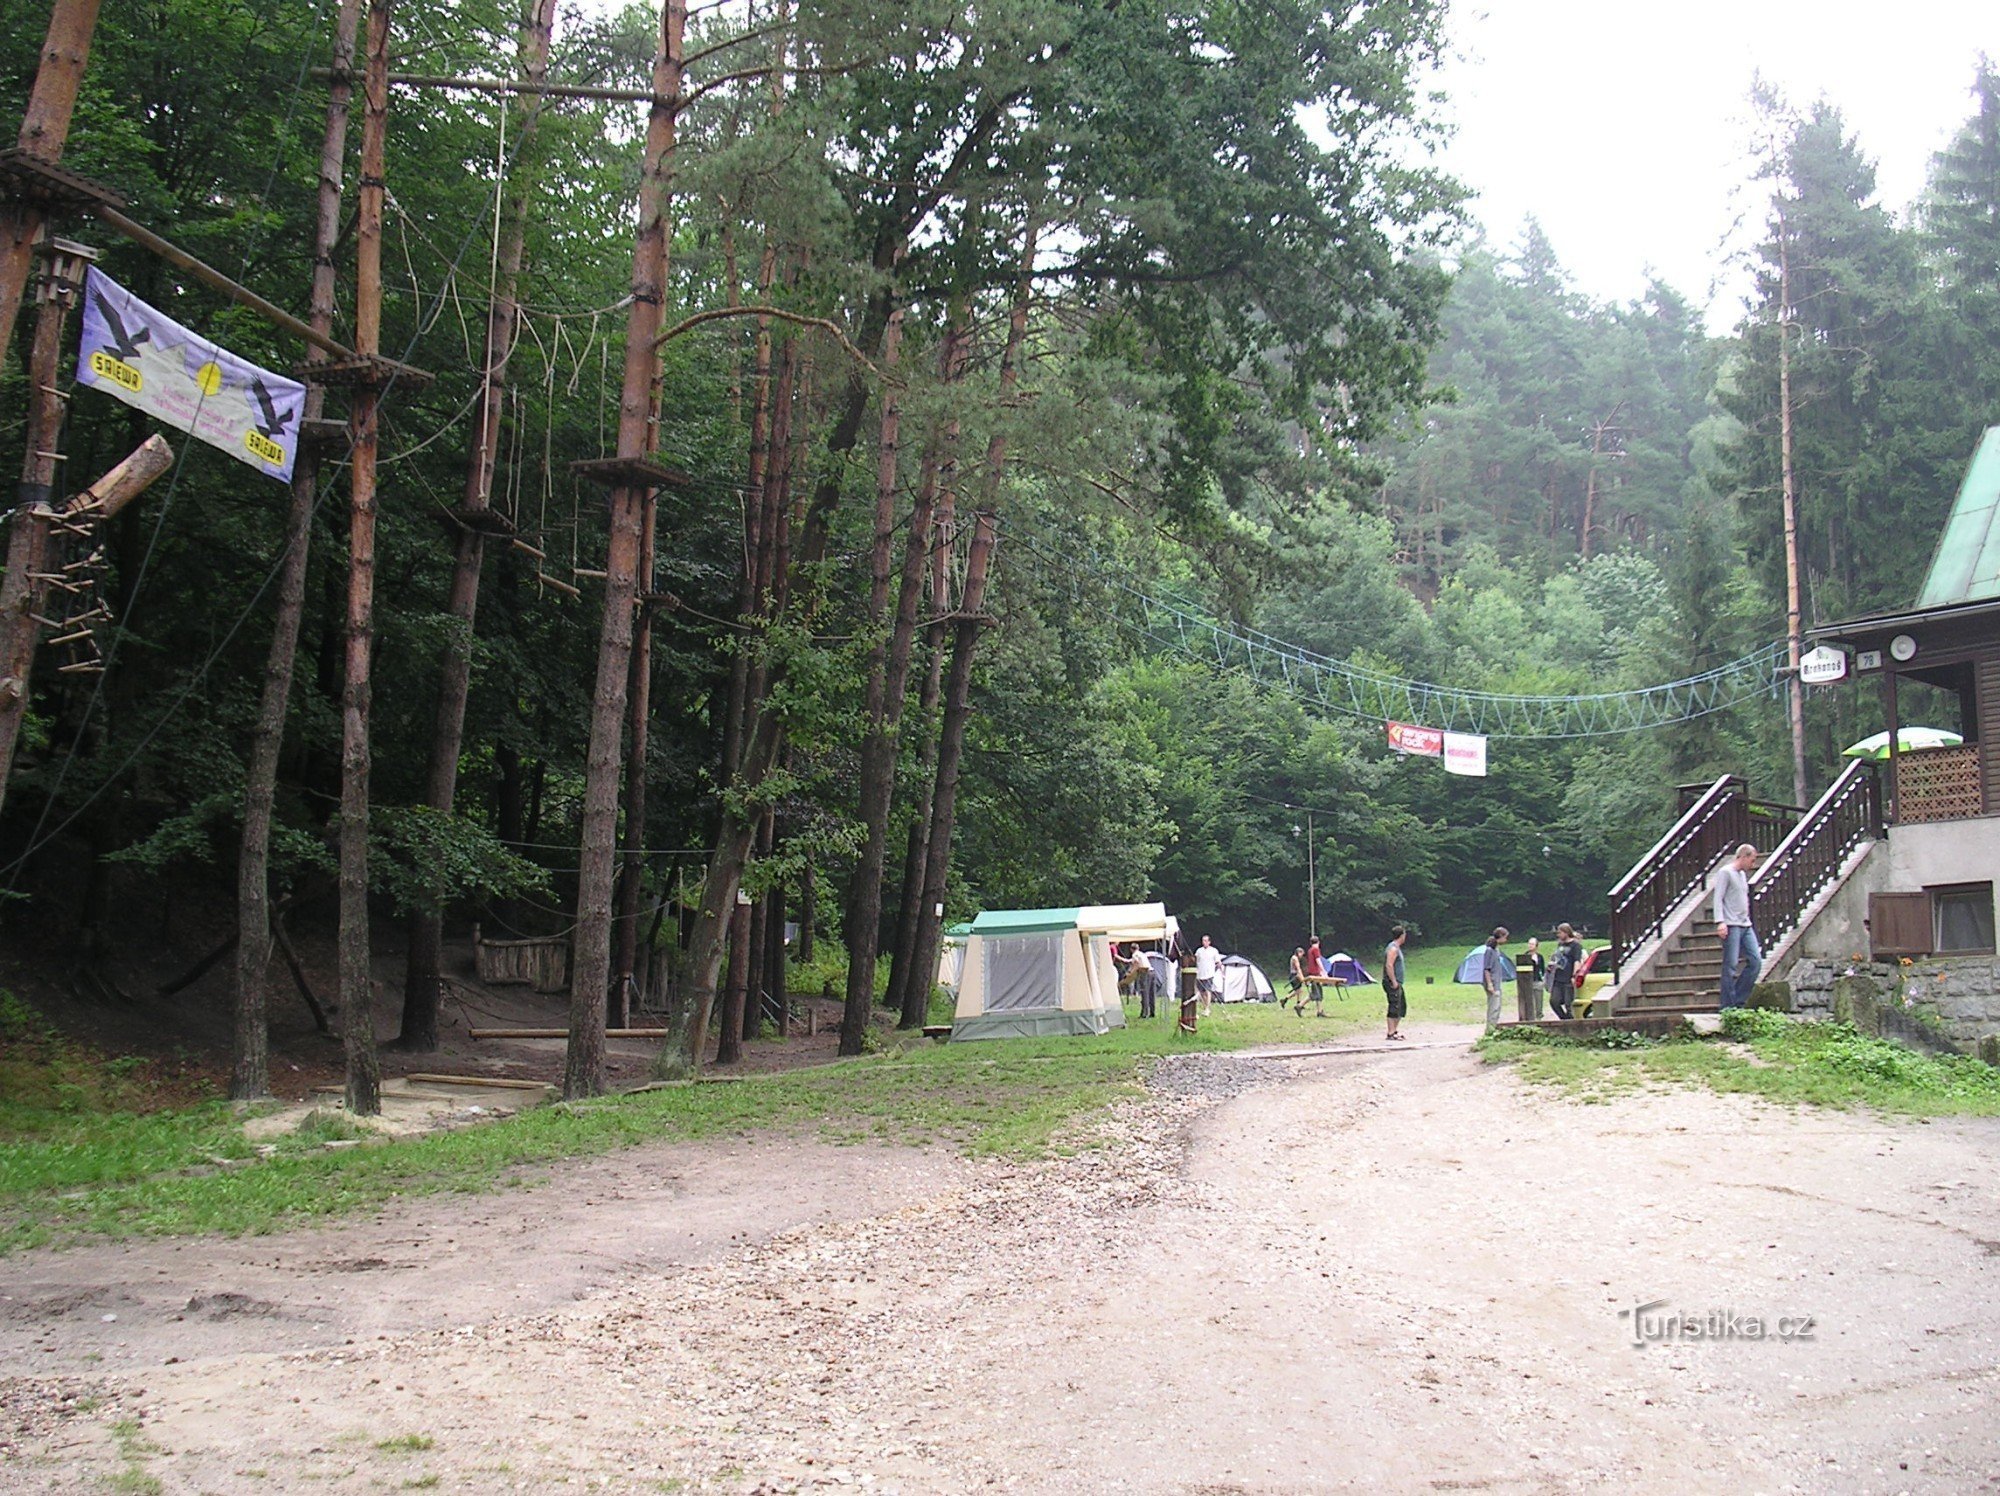 Seilbahn auf dem Campingplatz